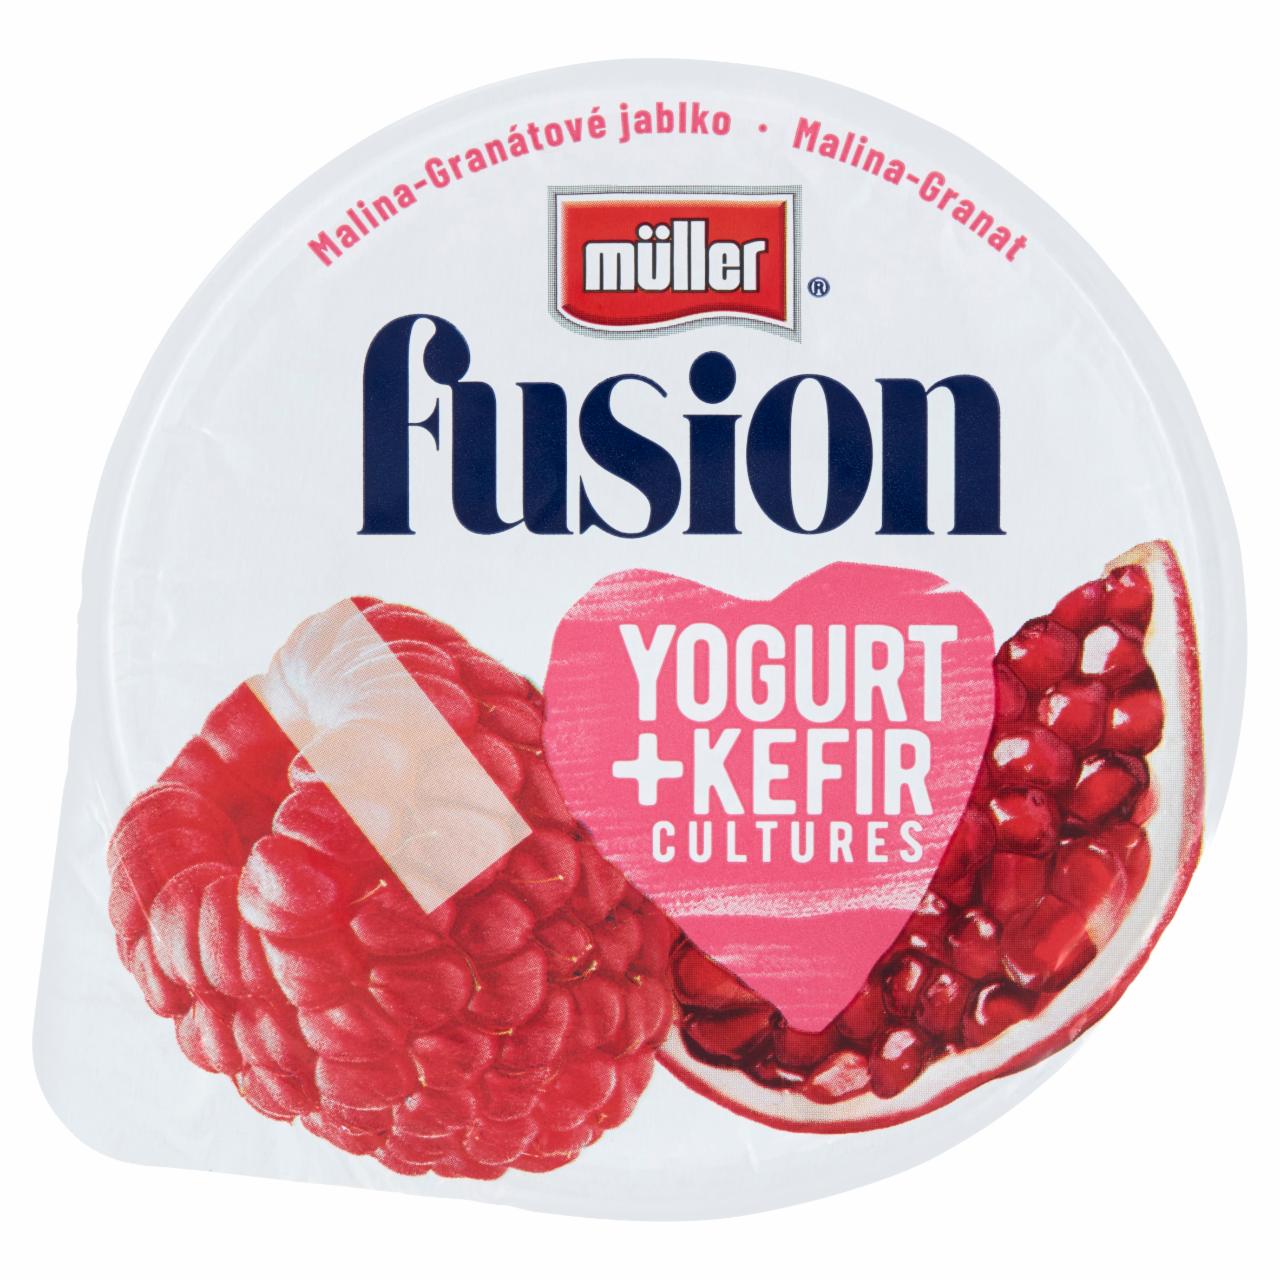 Zdjęcia - Müller Fusion Produkt mleczny fermentowany malina-granat 130 g